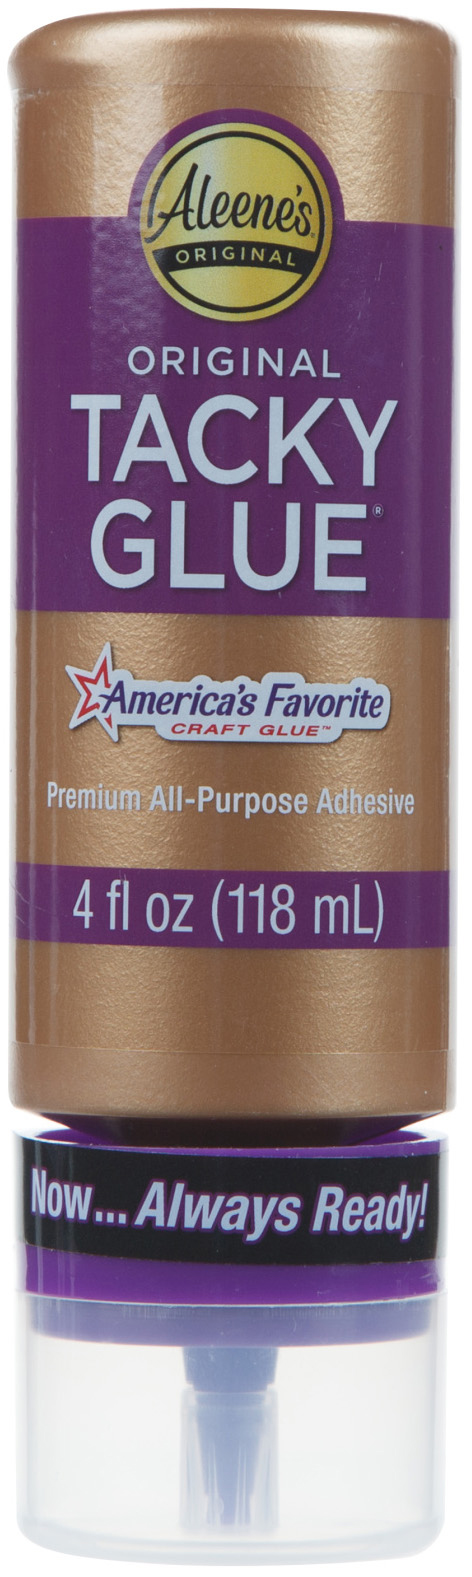 Aleene's Original Tacky Glue 4 fl oz (118 mL)